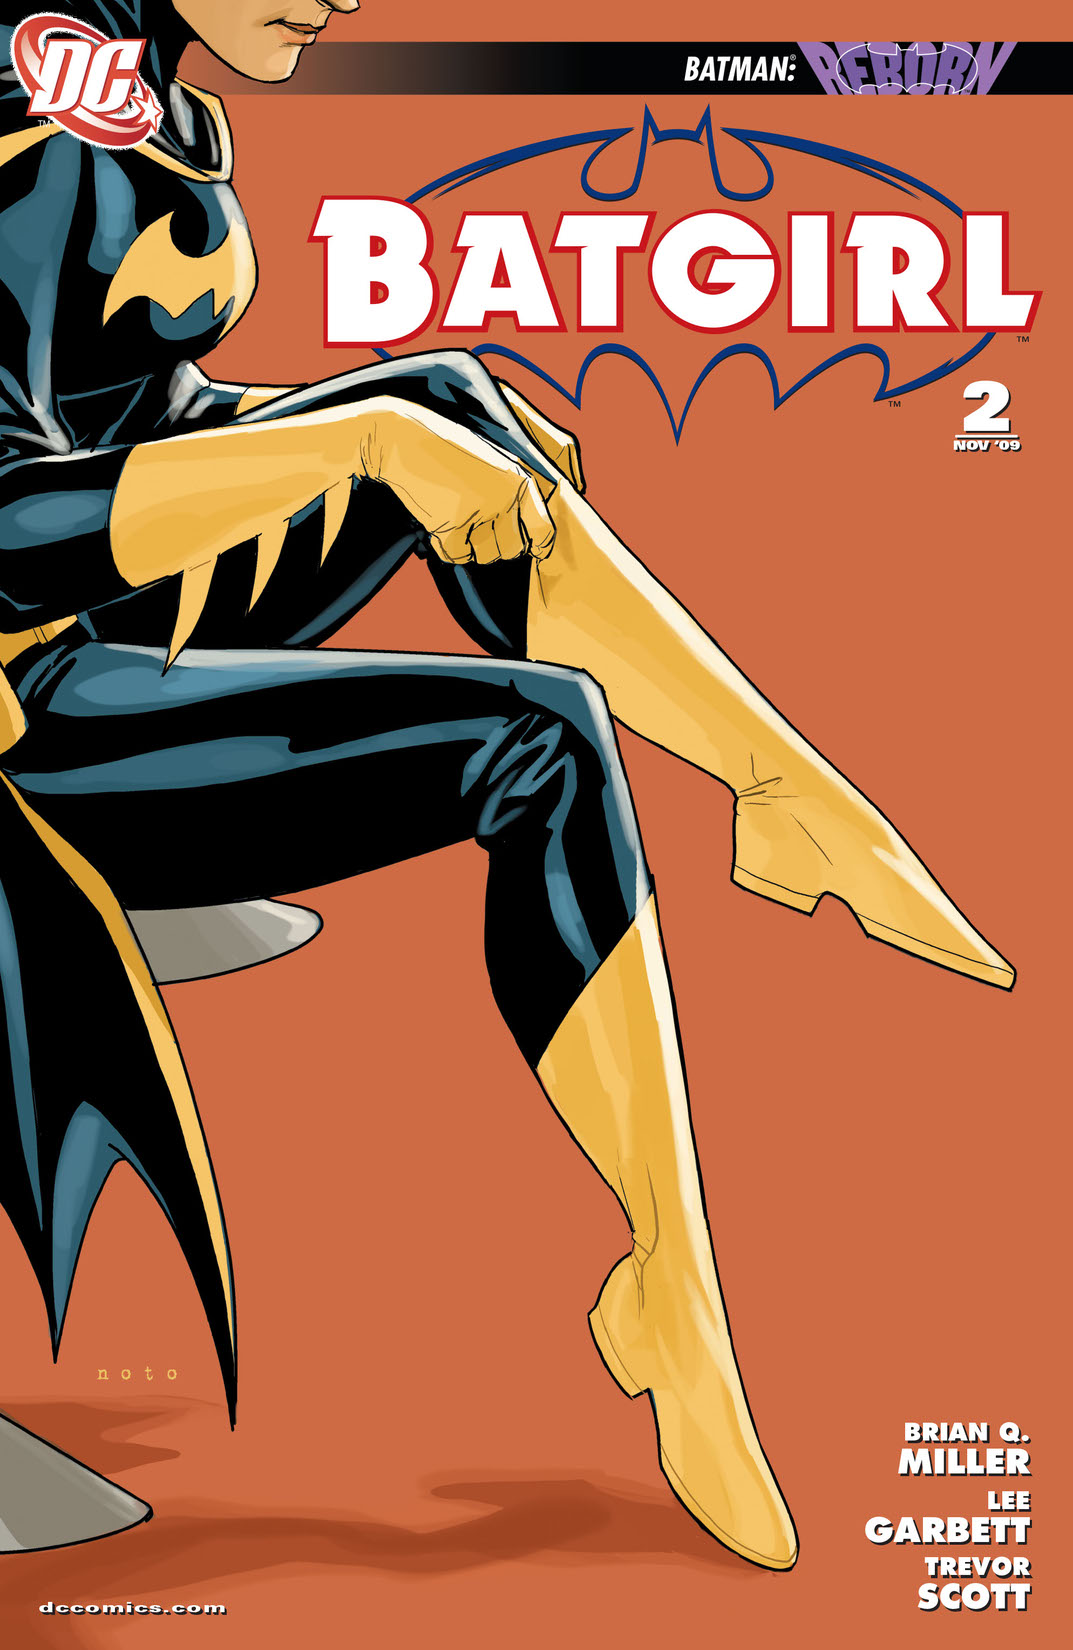 Batgirl (2009-) #2 preview images